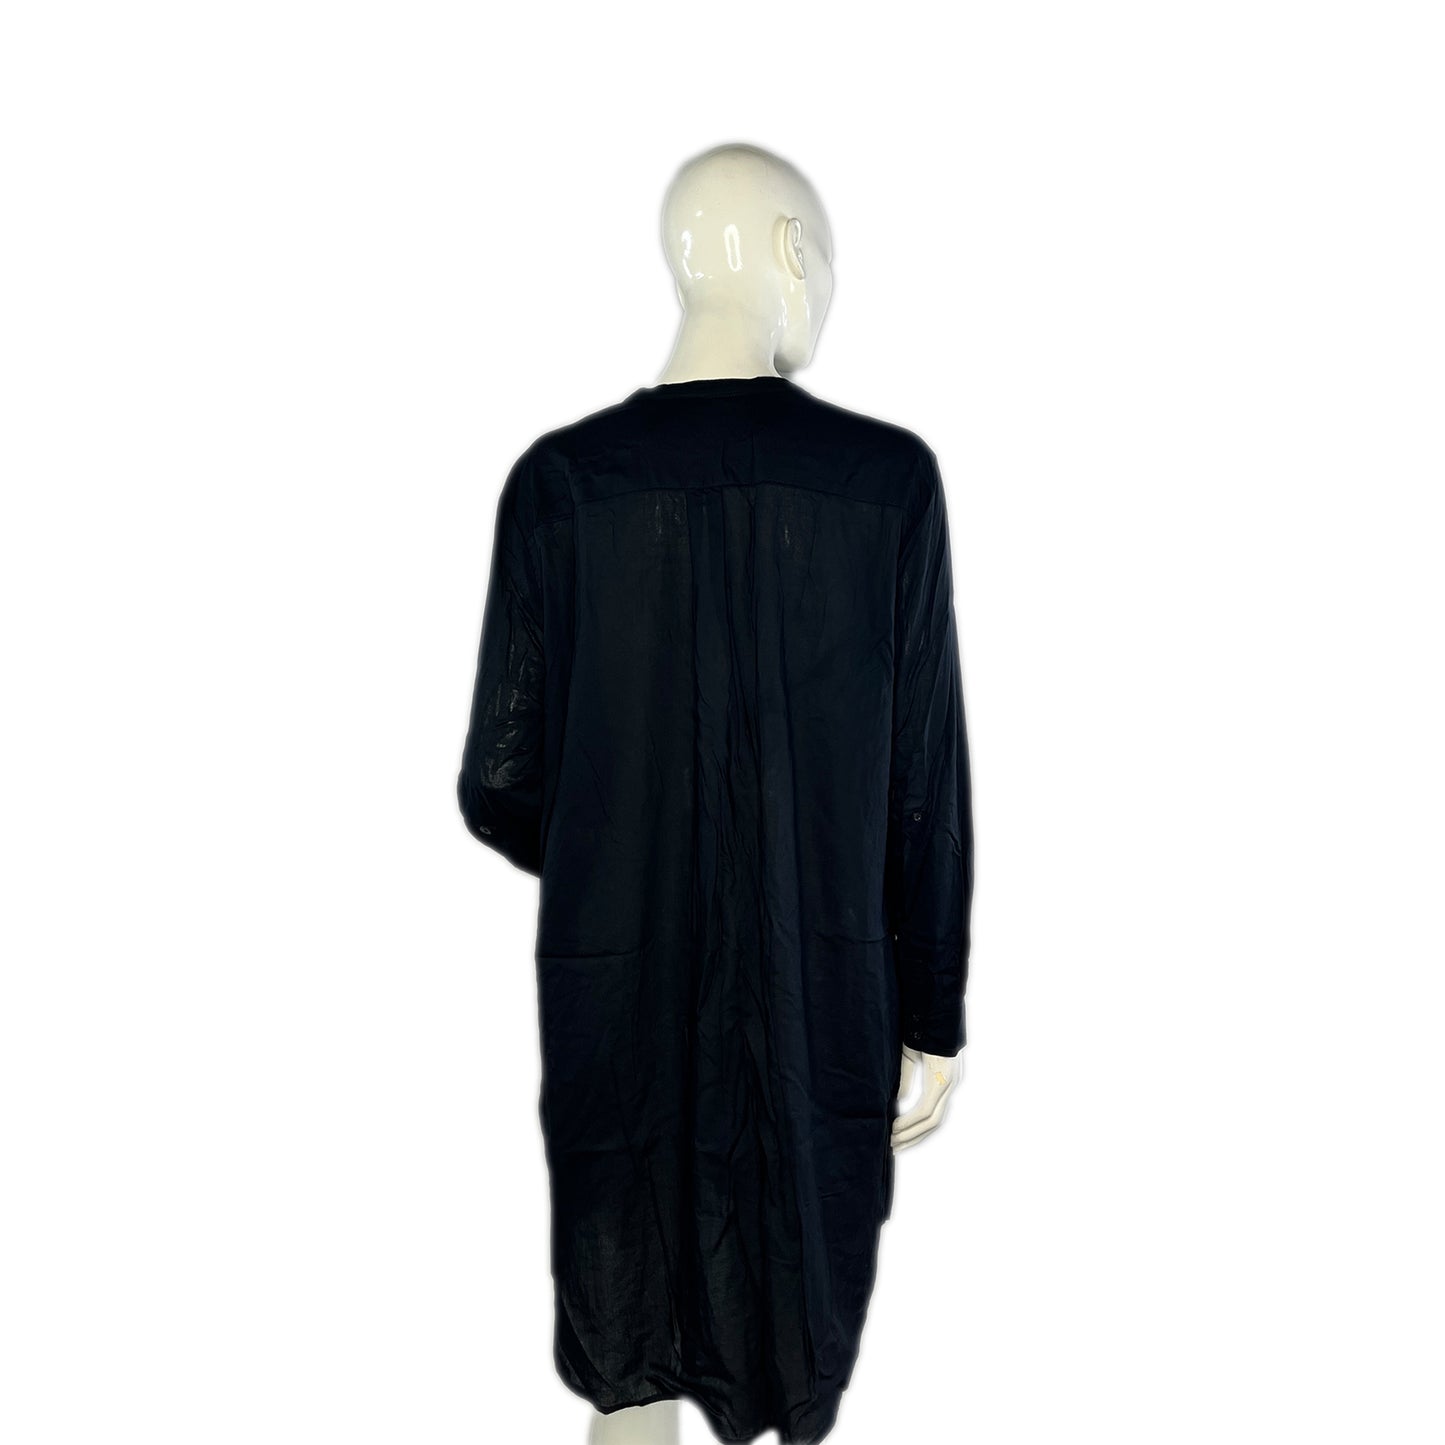 DKNY Dress Long Sleeves Button Down Black Size L SKU 000236-8